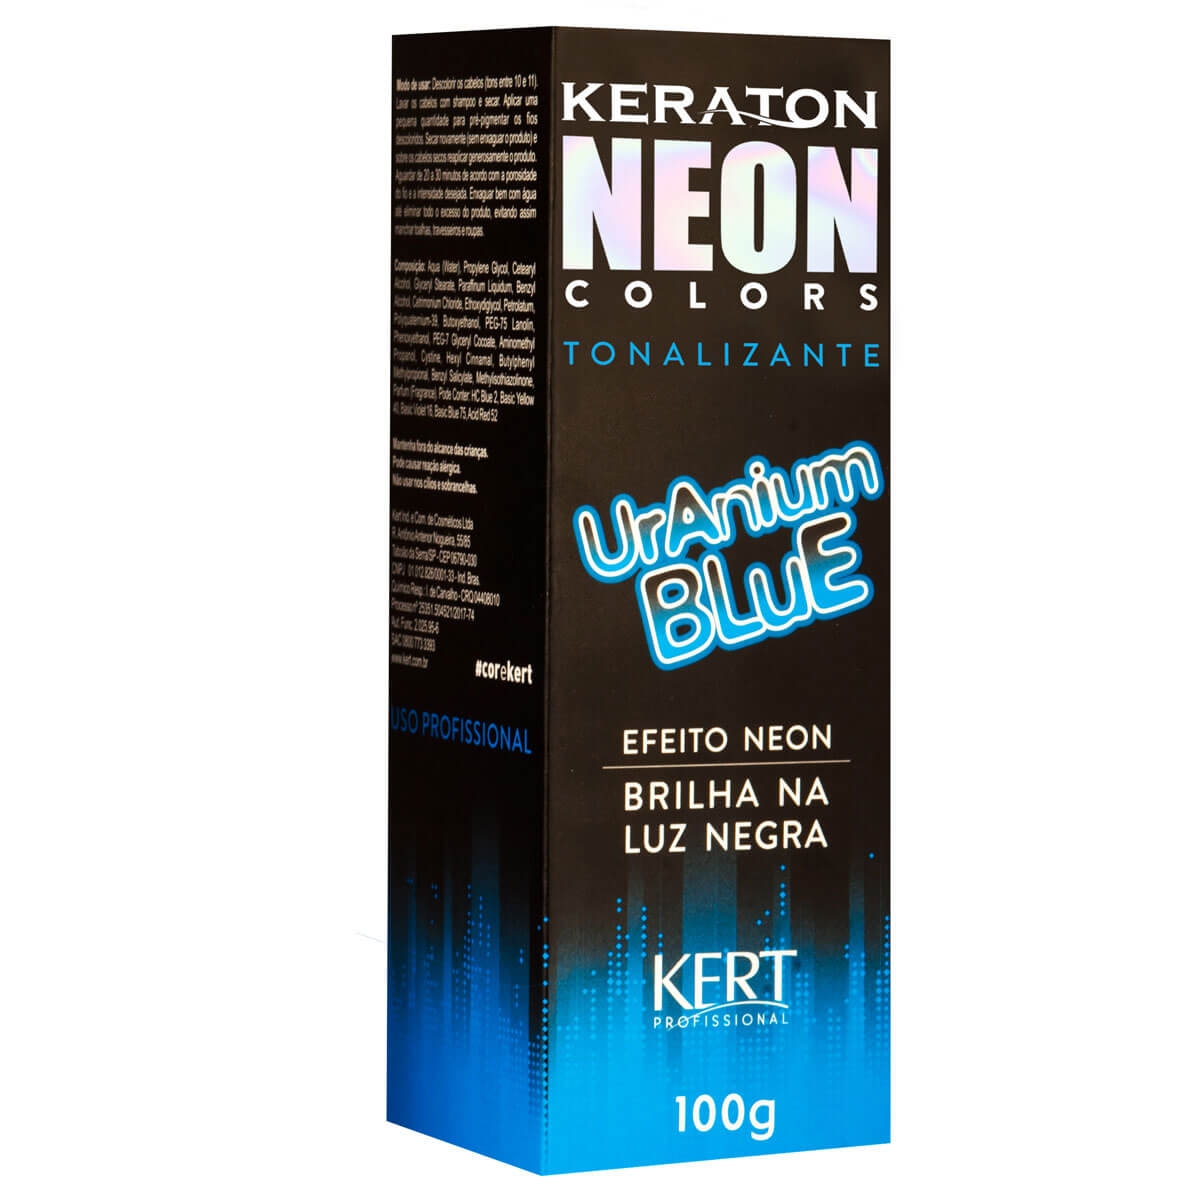 Tonalizante Capilar Keraton Neon Colors Uranium Blue com 100g 100g